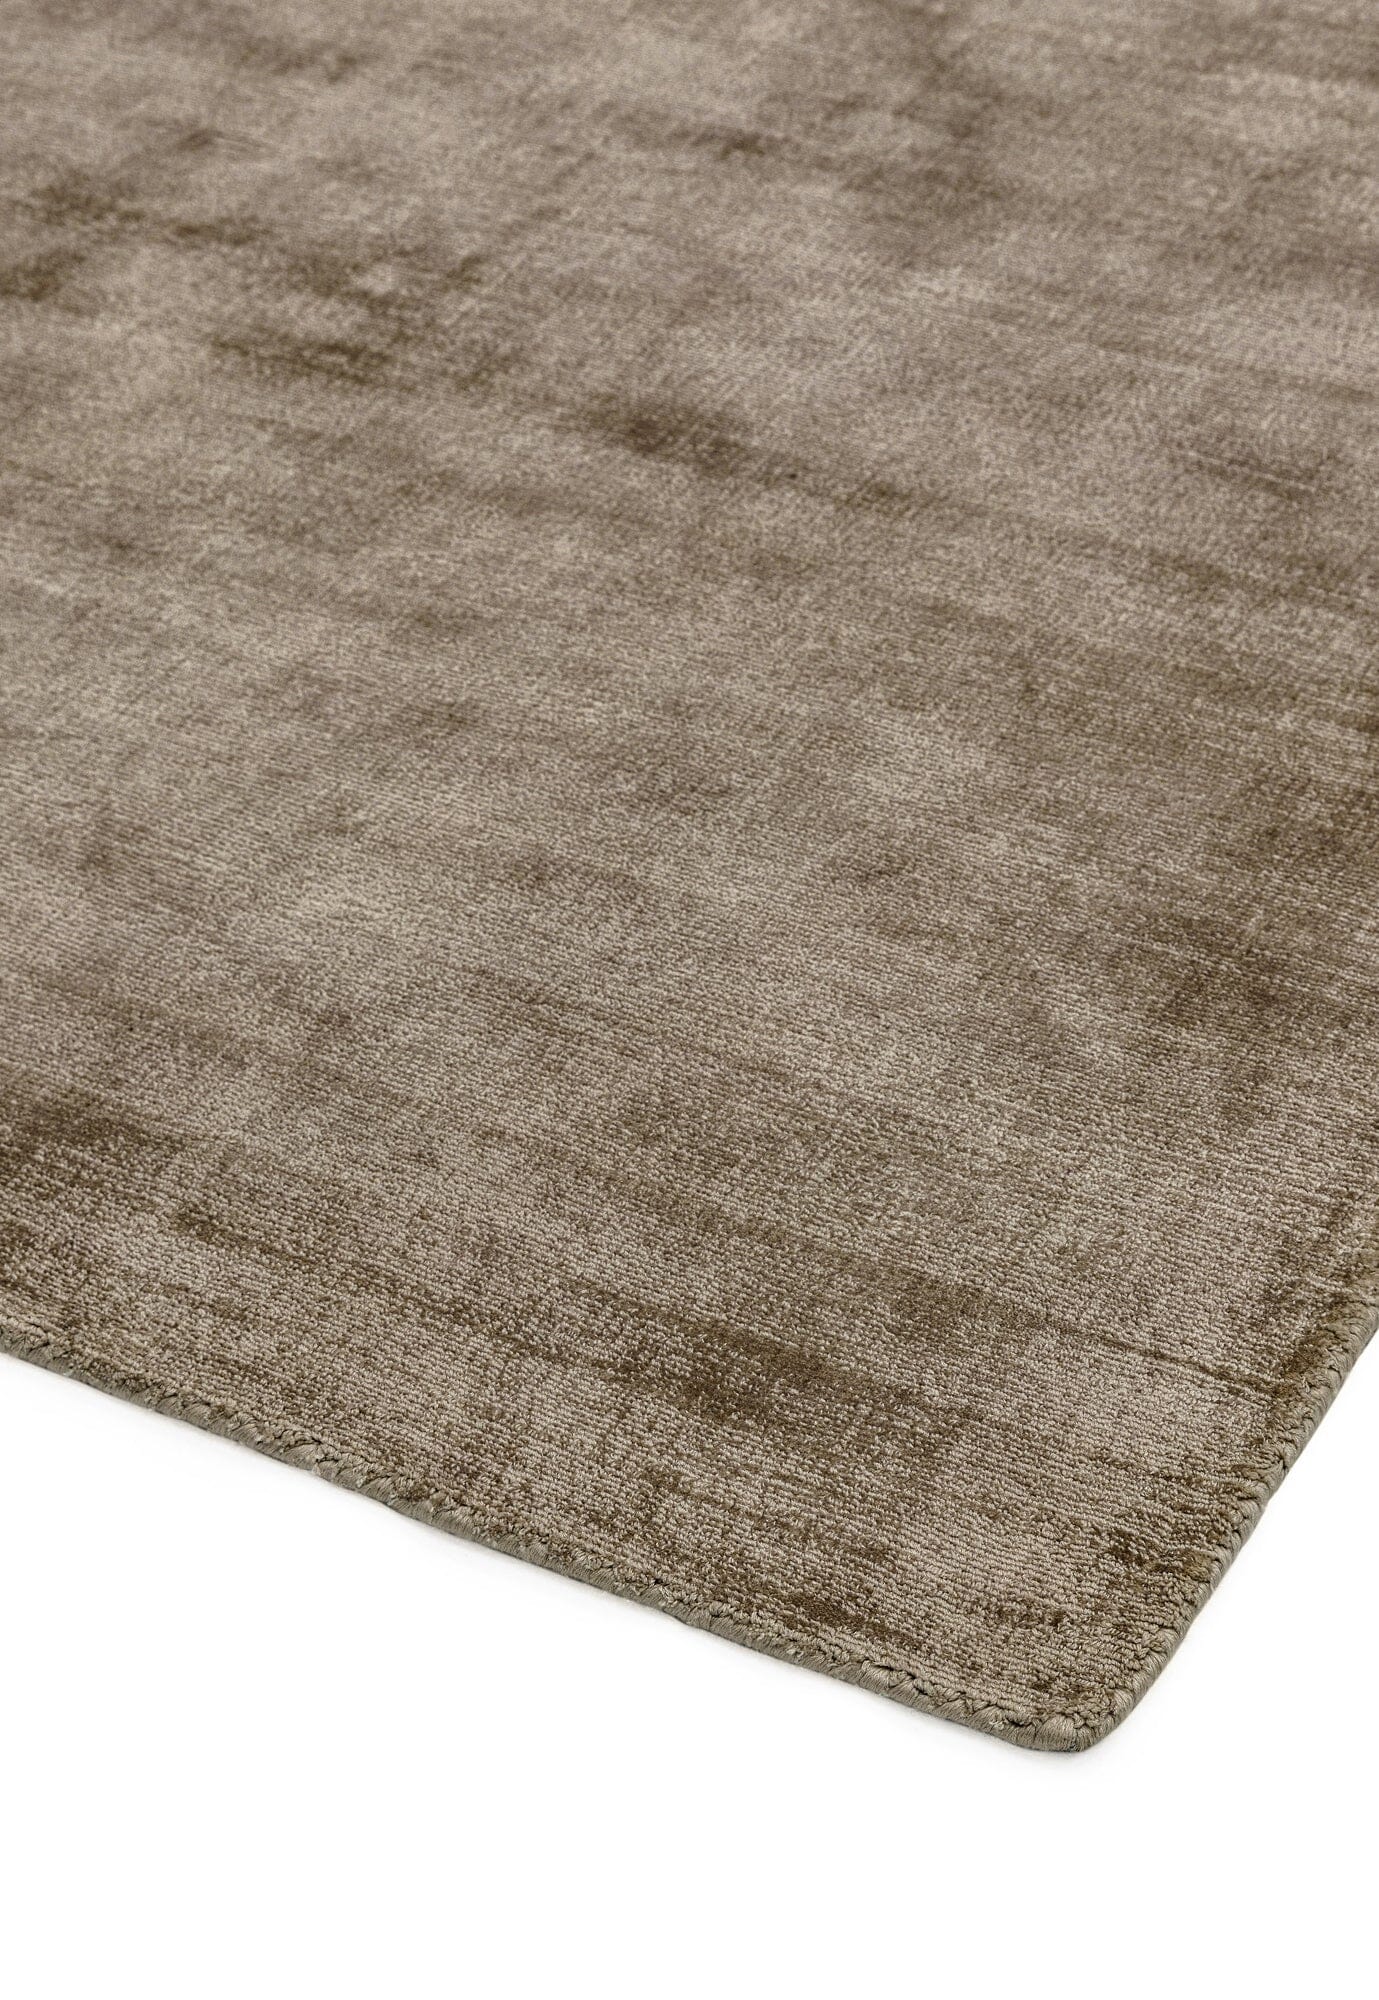 Asiatic Carpets Blade Hand Woven Runner Mocha - 66 x 240cm